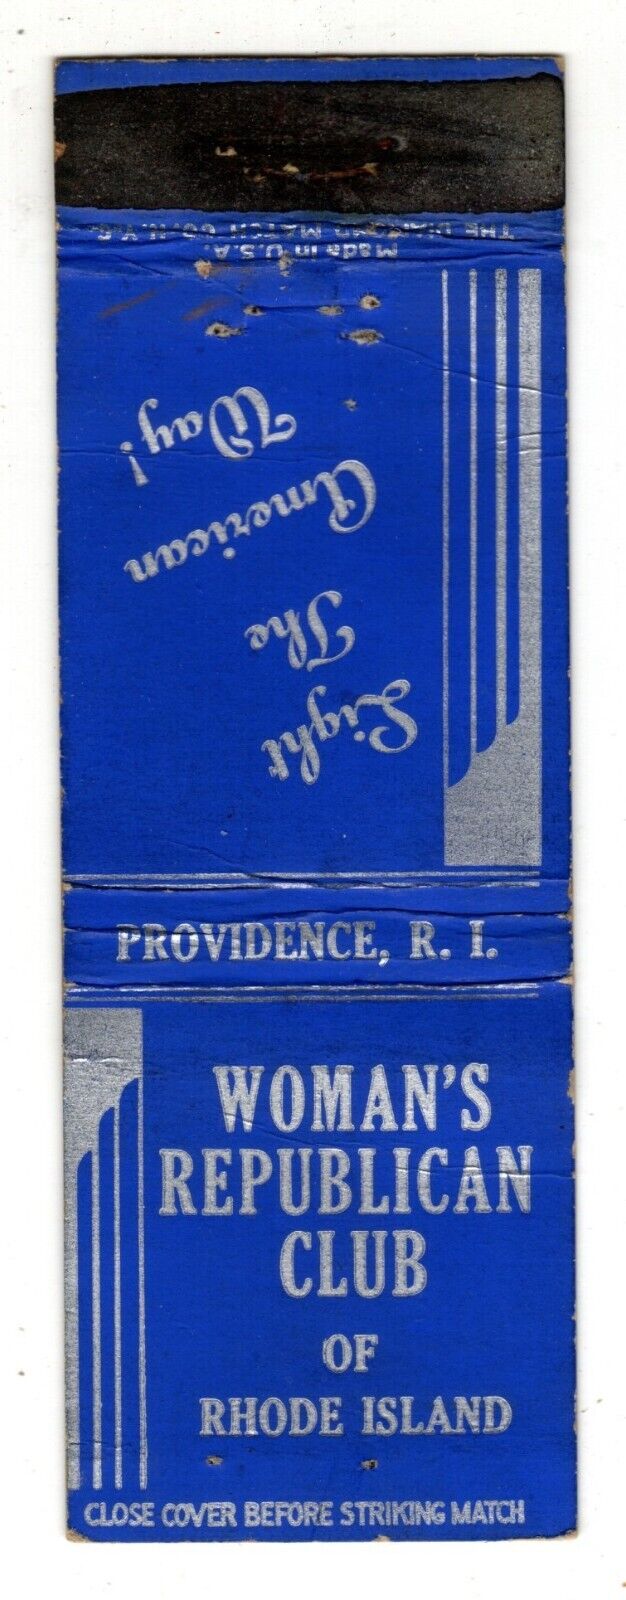 WOMAN'S REPUBLICAN CLUB matchbook matchcover - PROVIDENCE, RHODE ISLAND